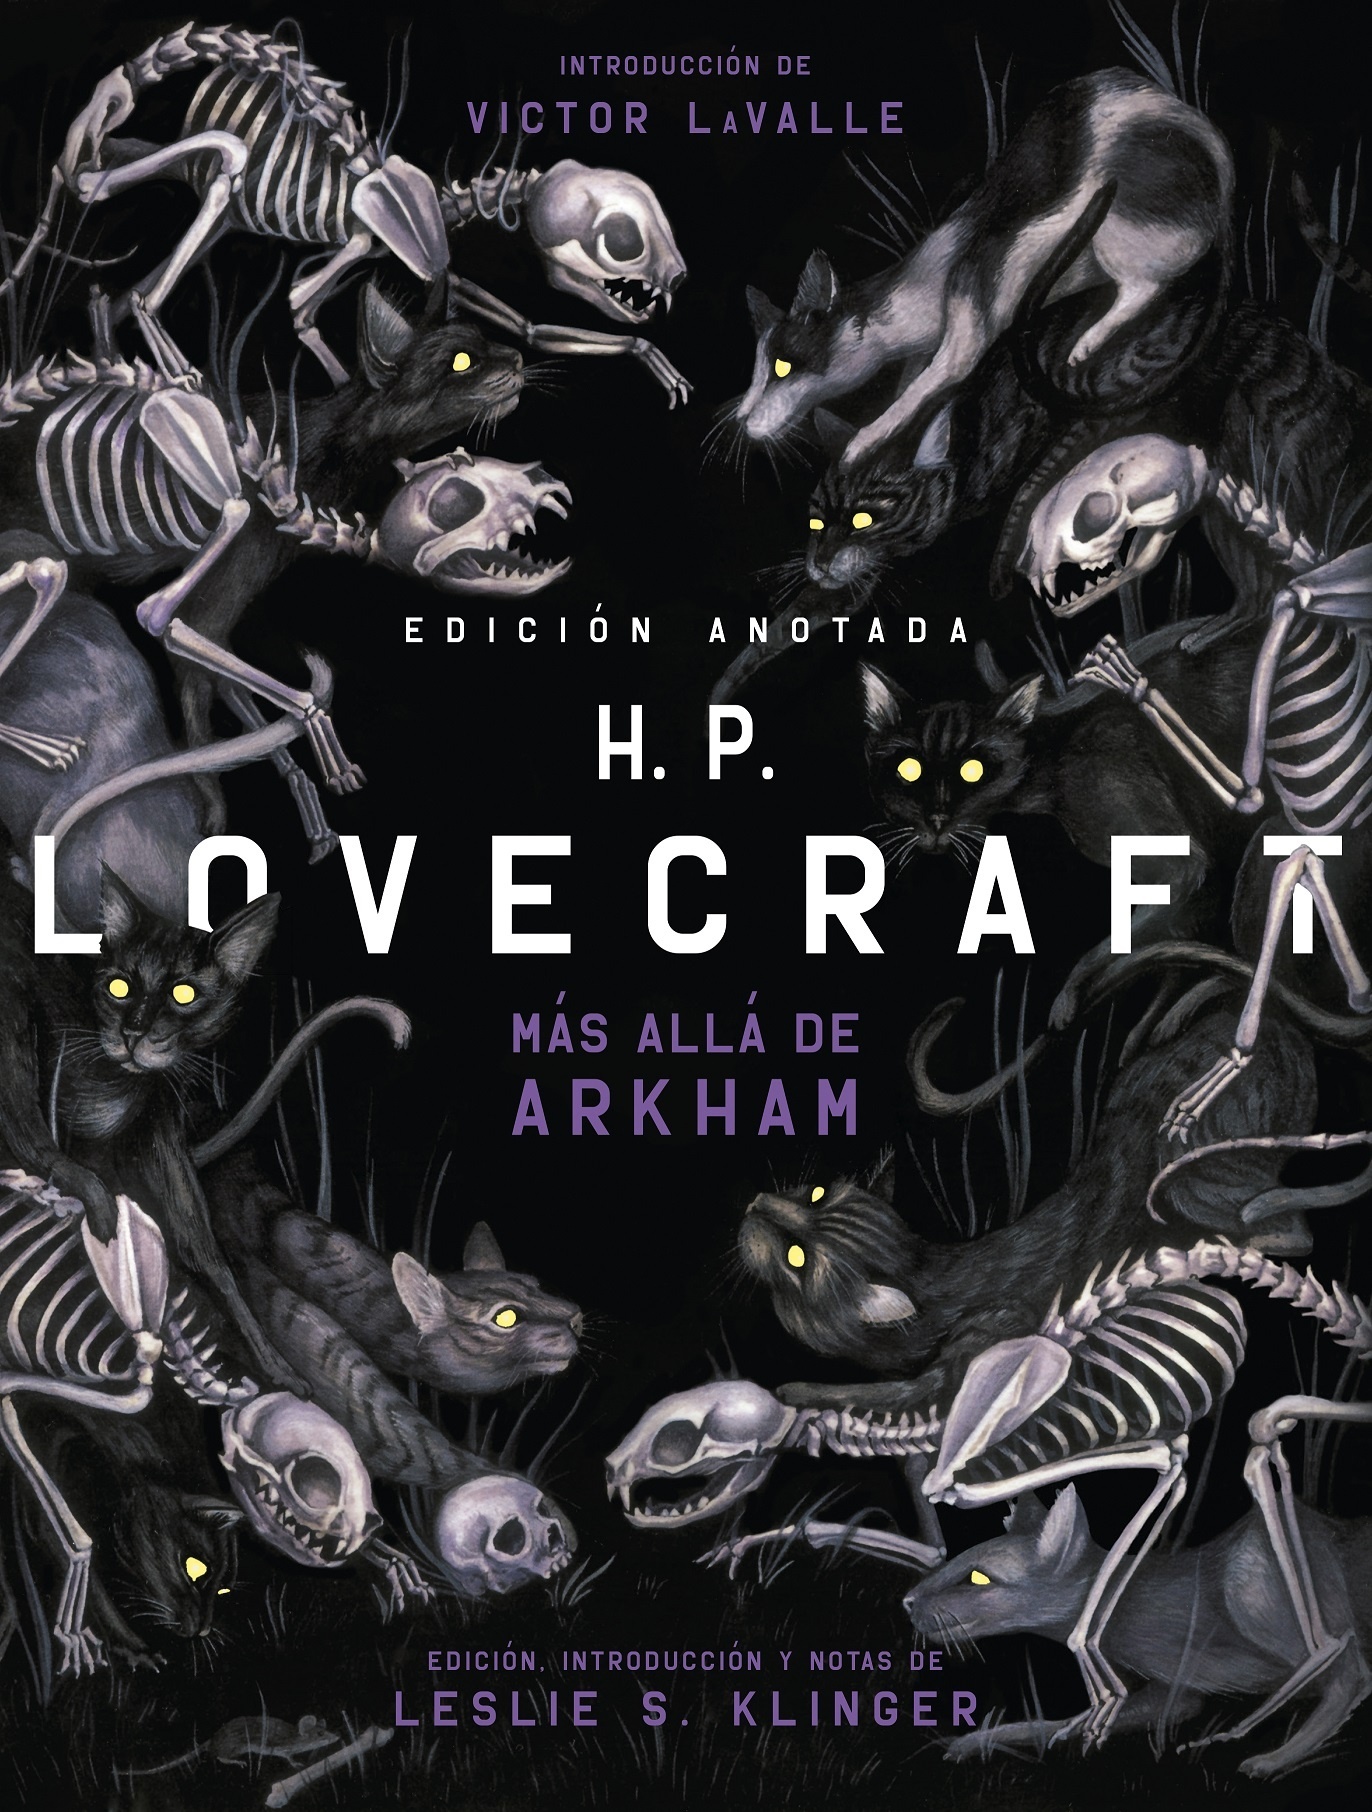 H. P. Lovecraft anotado. Más allá de Arkham. 